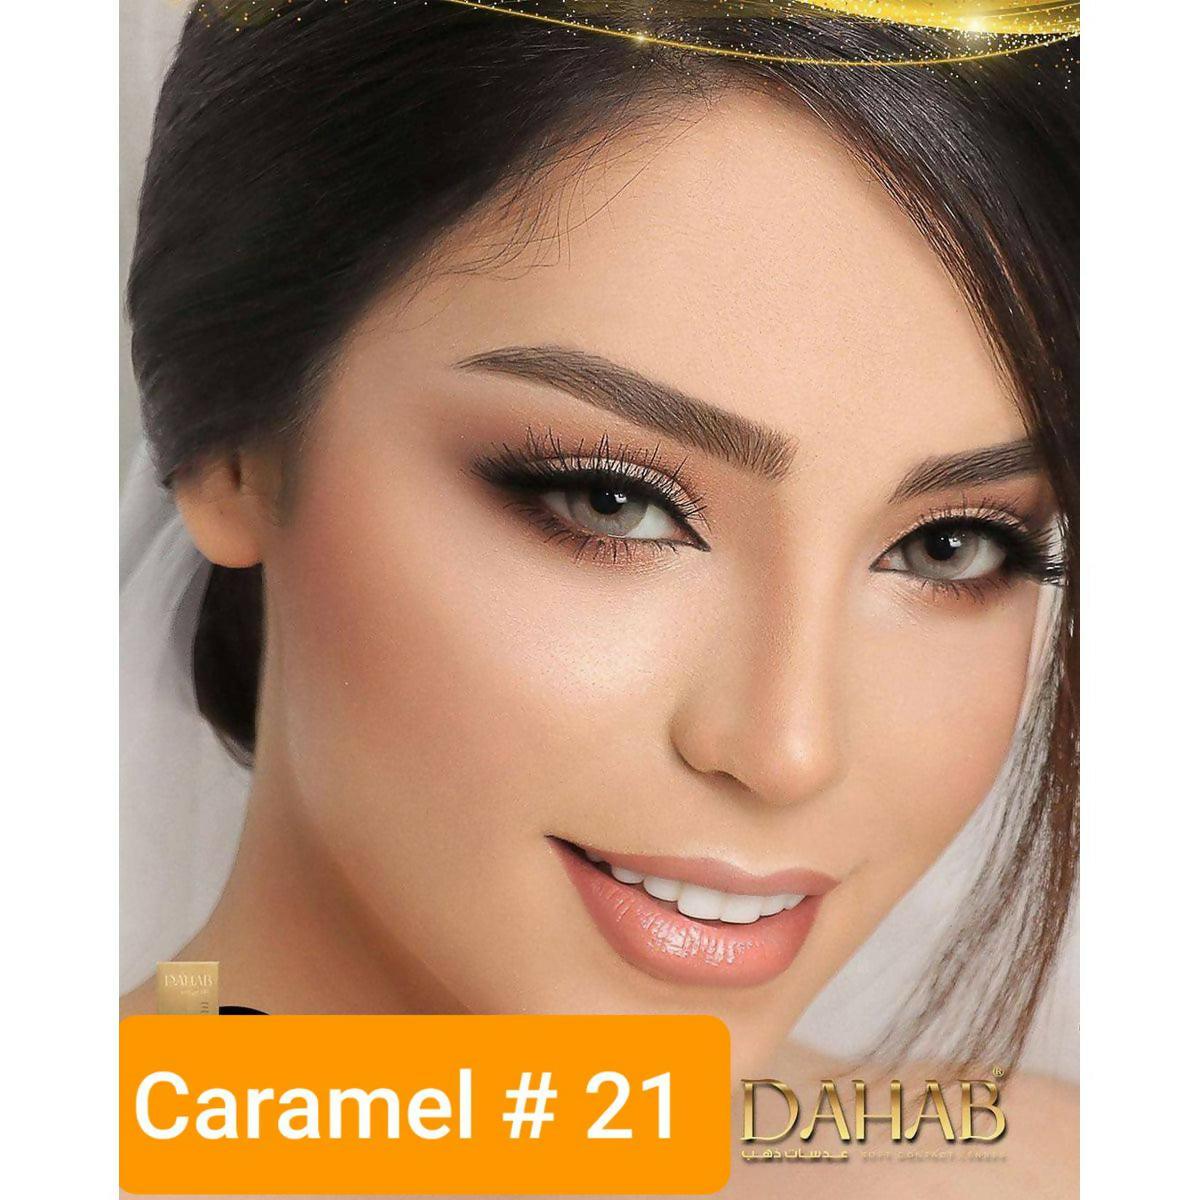 Dahab Caramel lenses with free solution kit - ValueBox